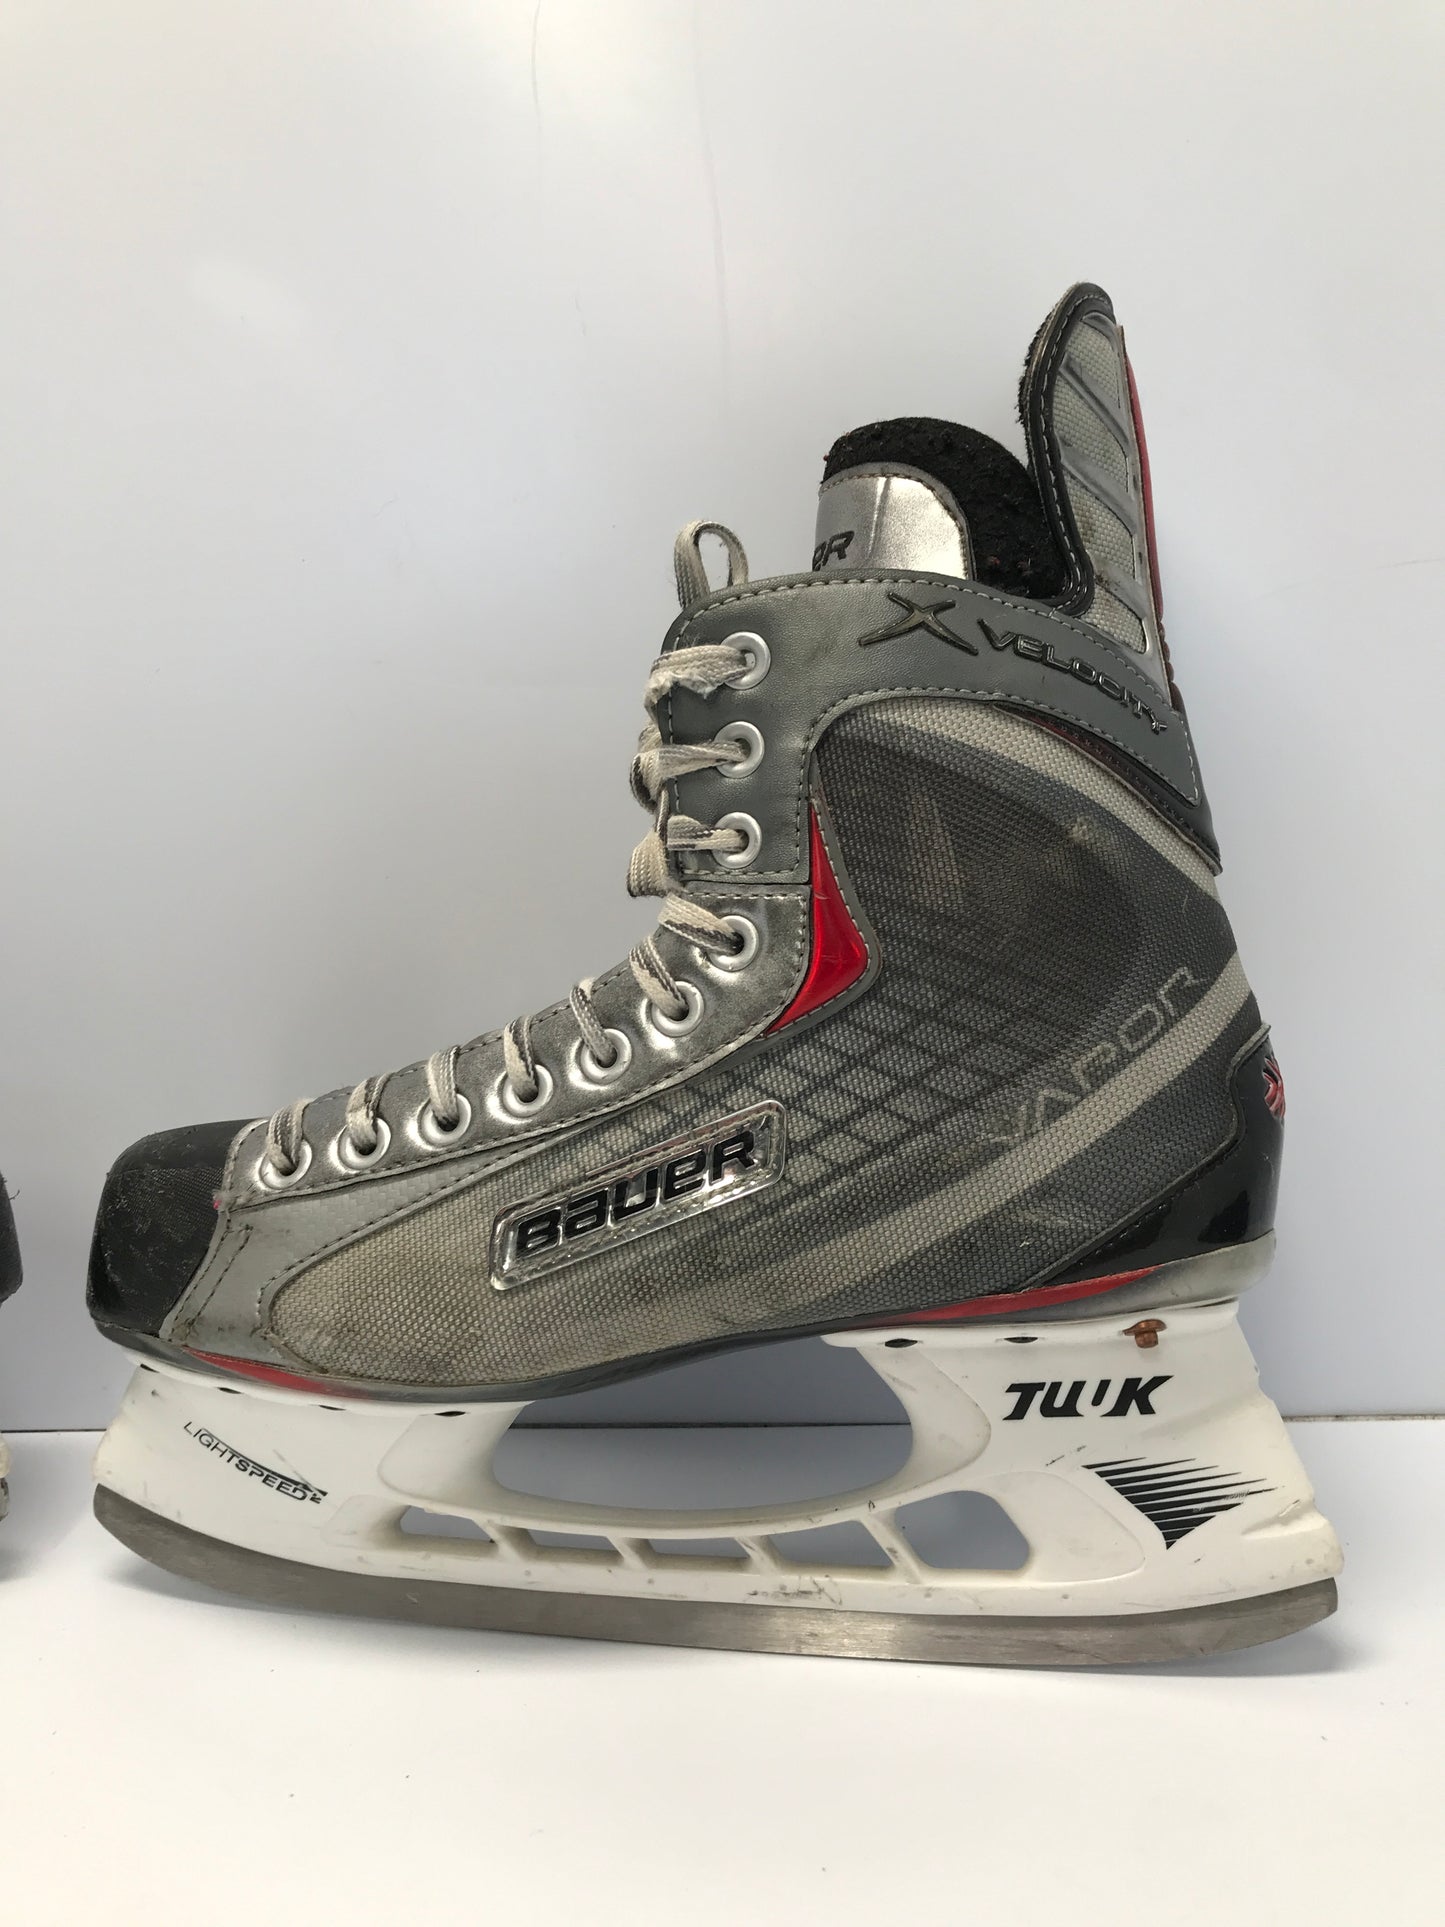 Hockey Skates Men's Size 10 Shoe Size 8.5 Skate Bauer Vapor